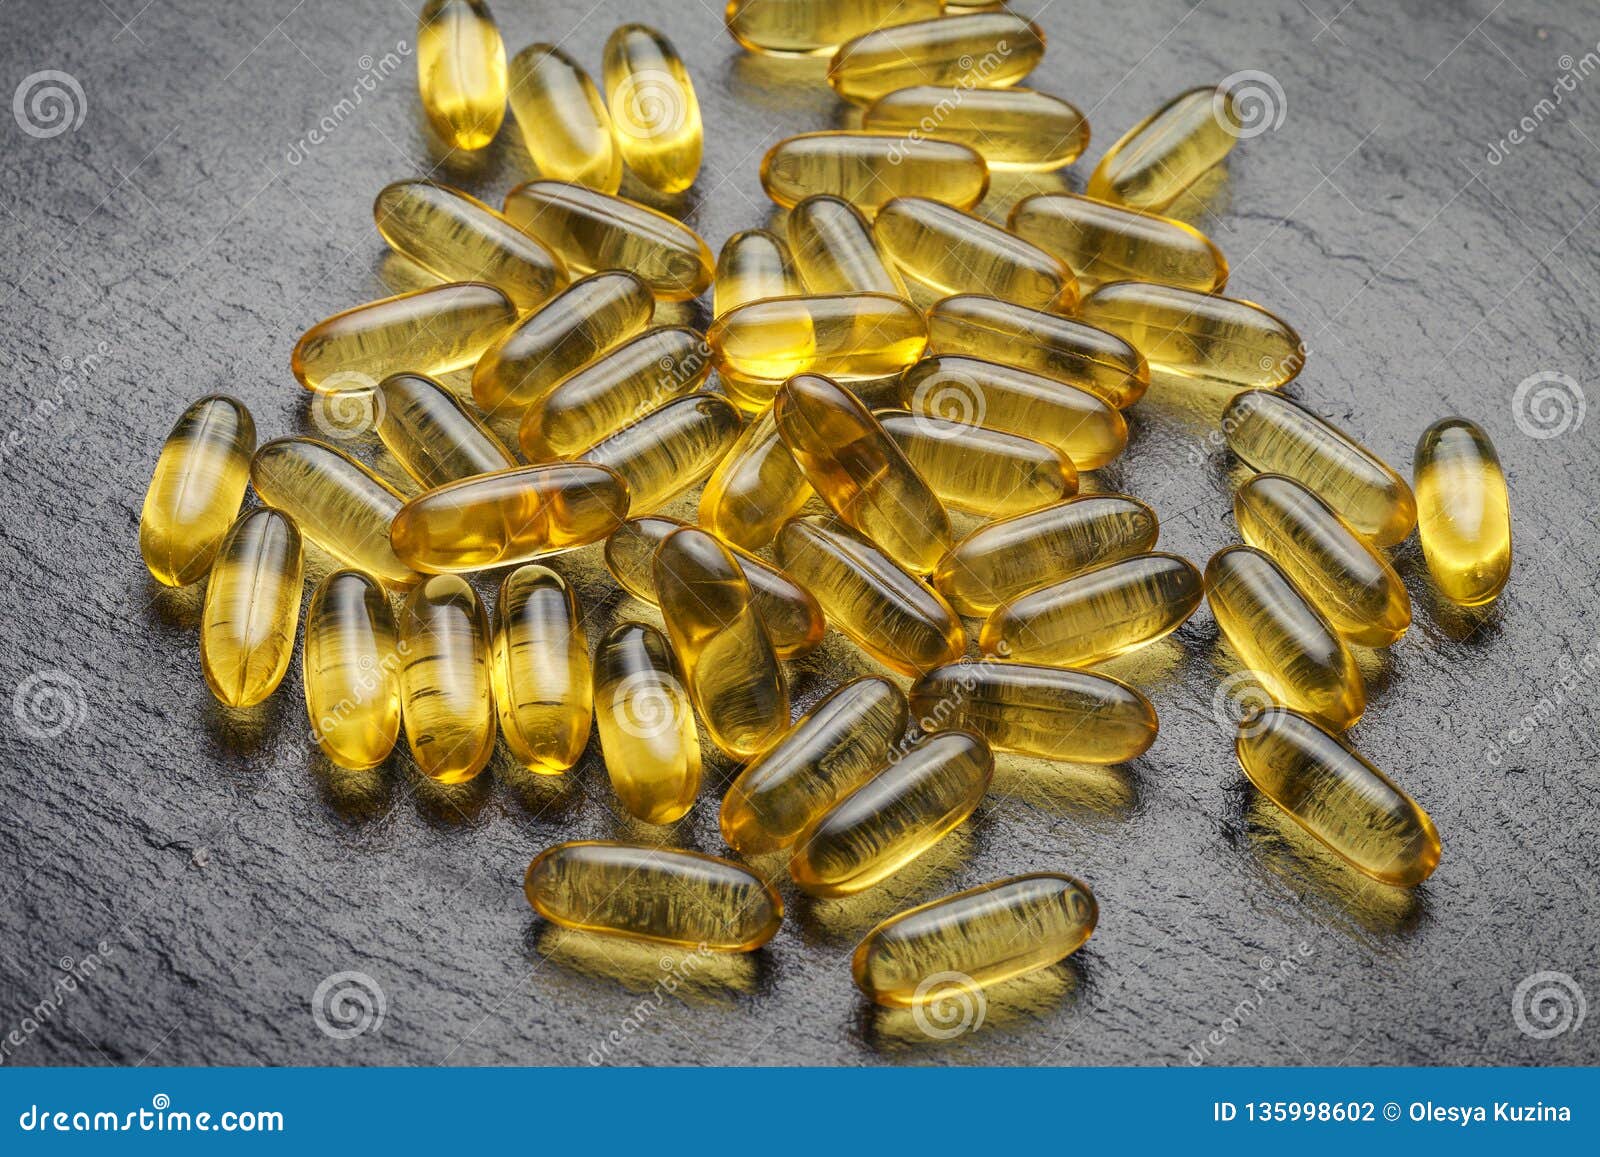 omega 3. transparent fish oil capsules on a black background